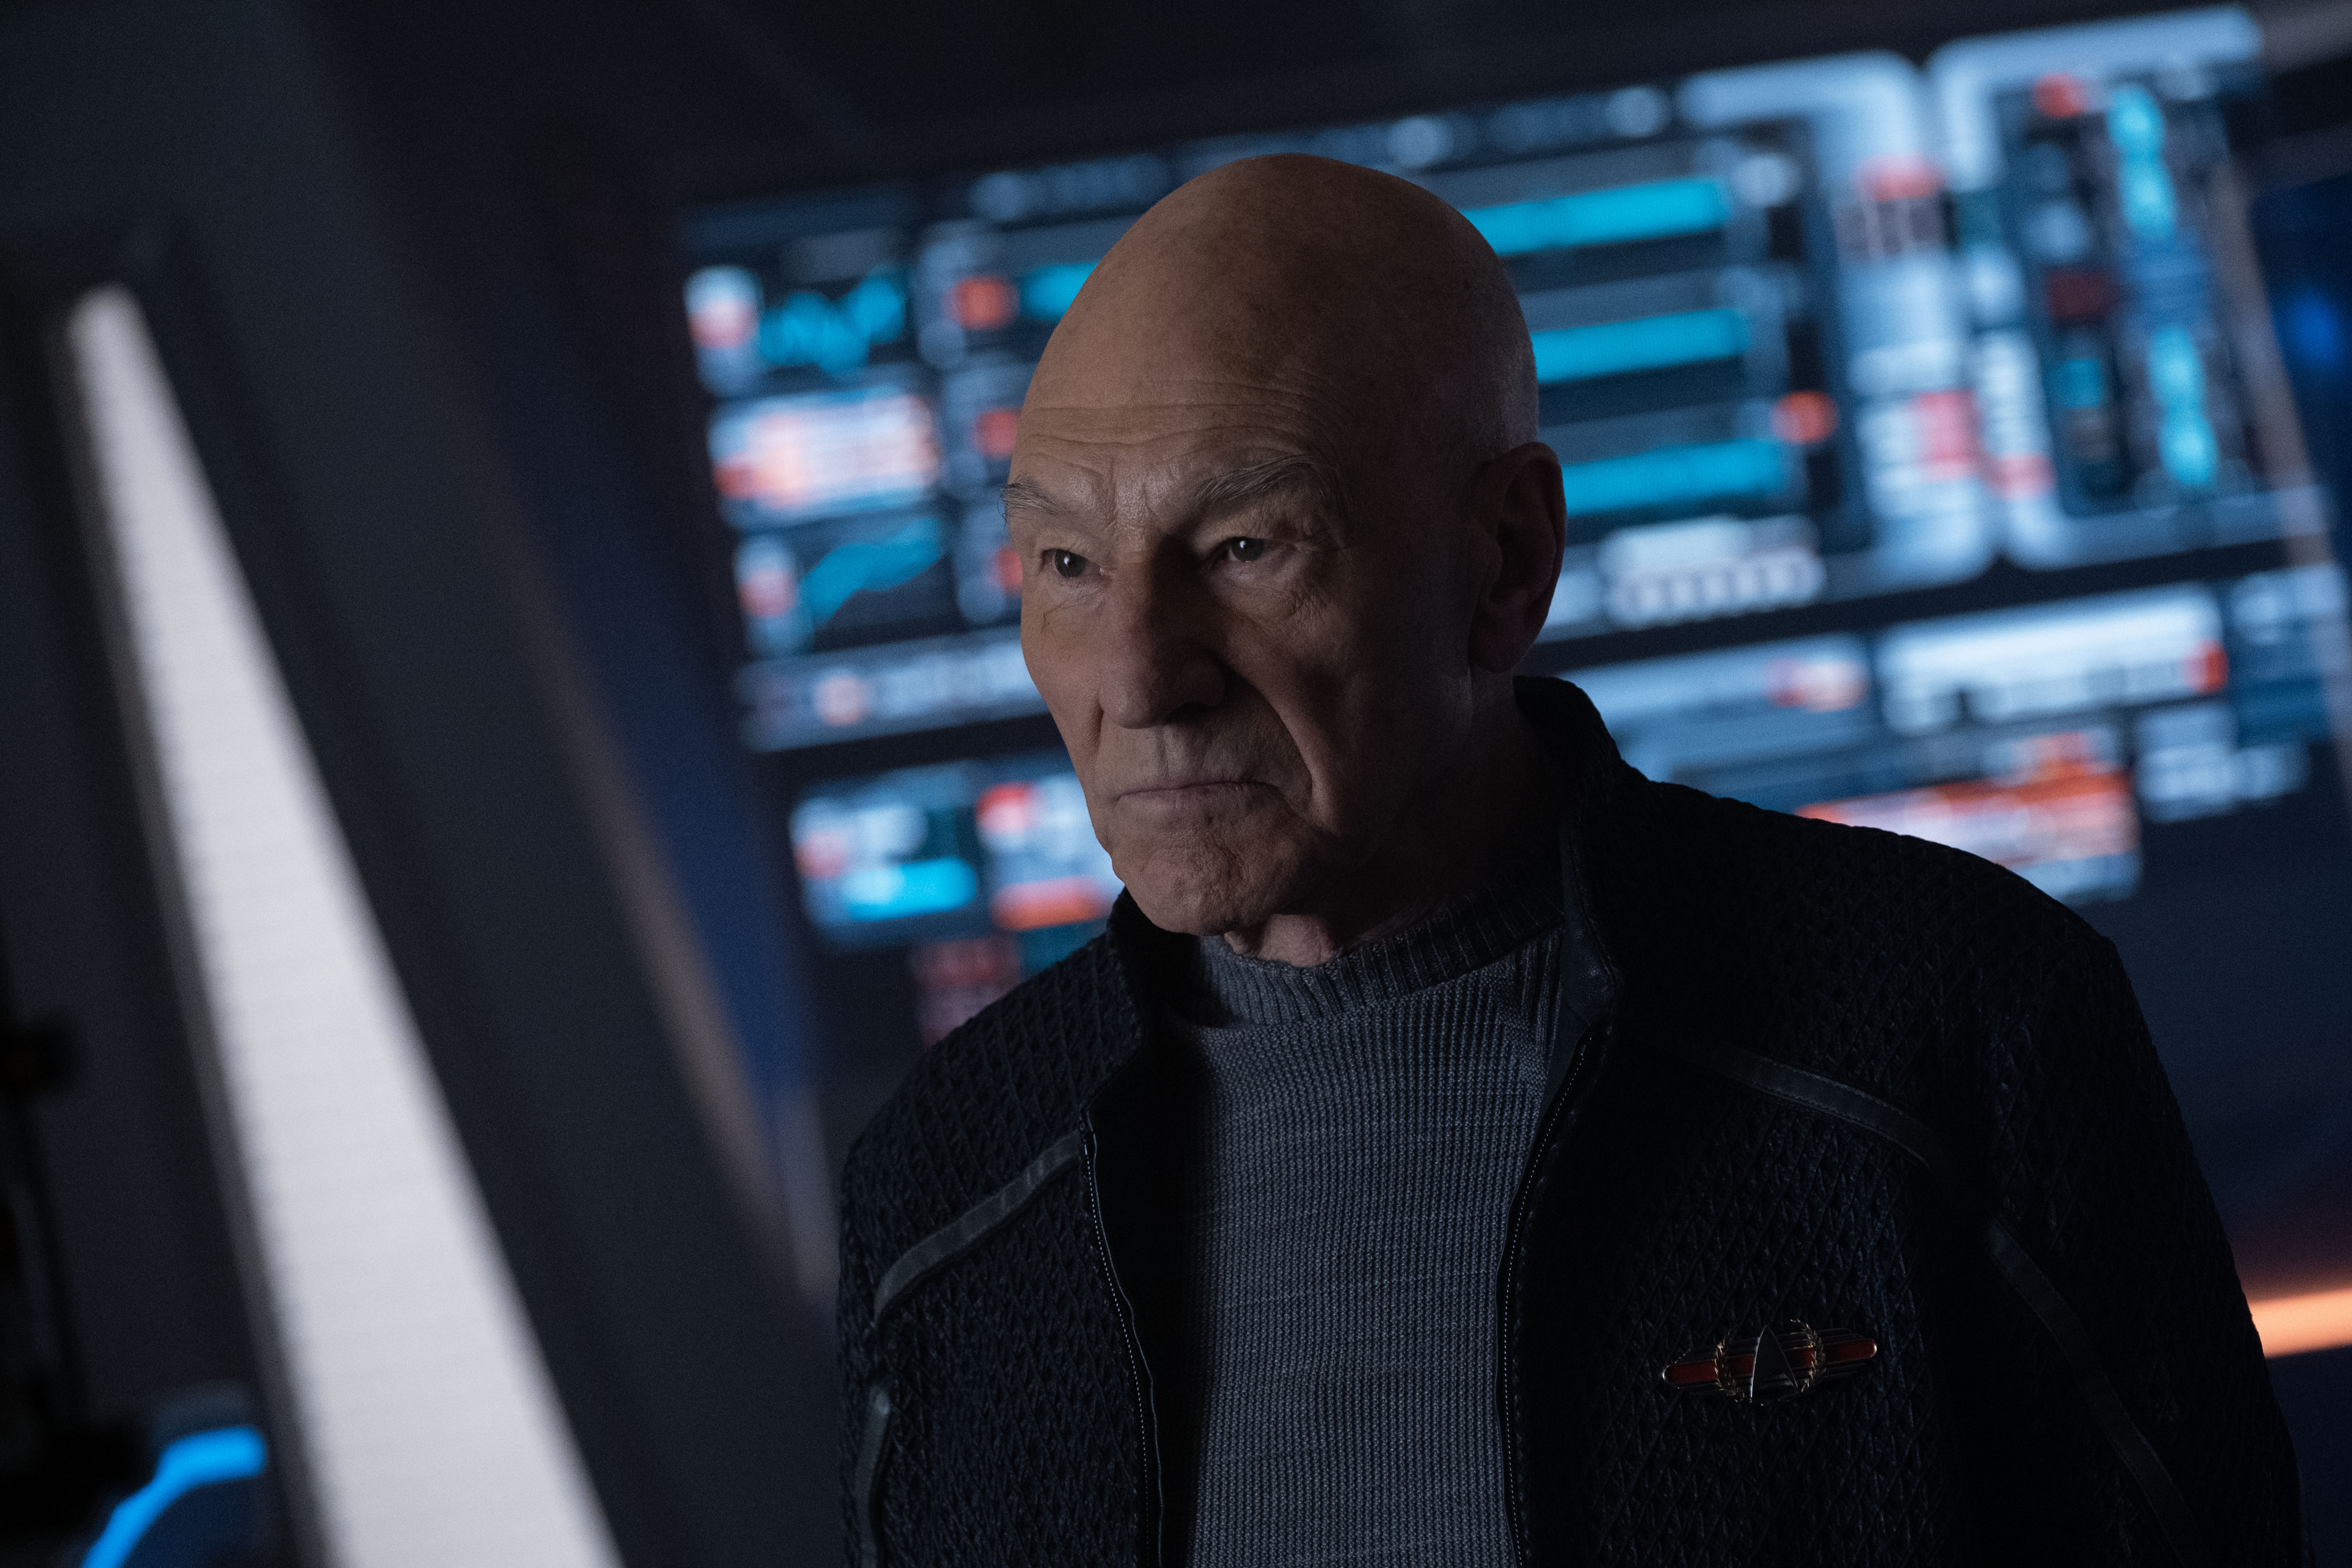 Picard (Patrick Stewart) looking stoic